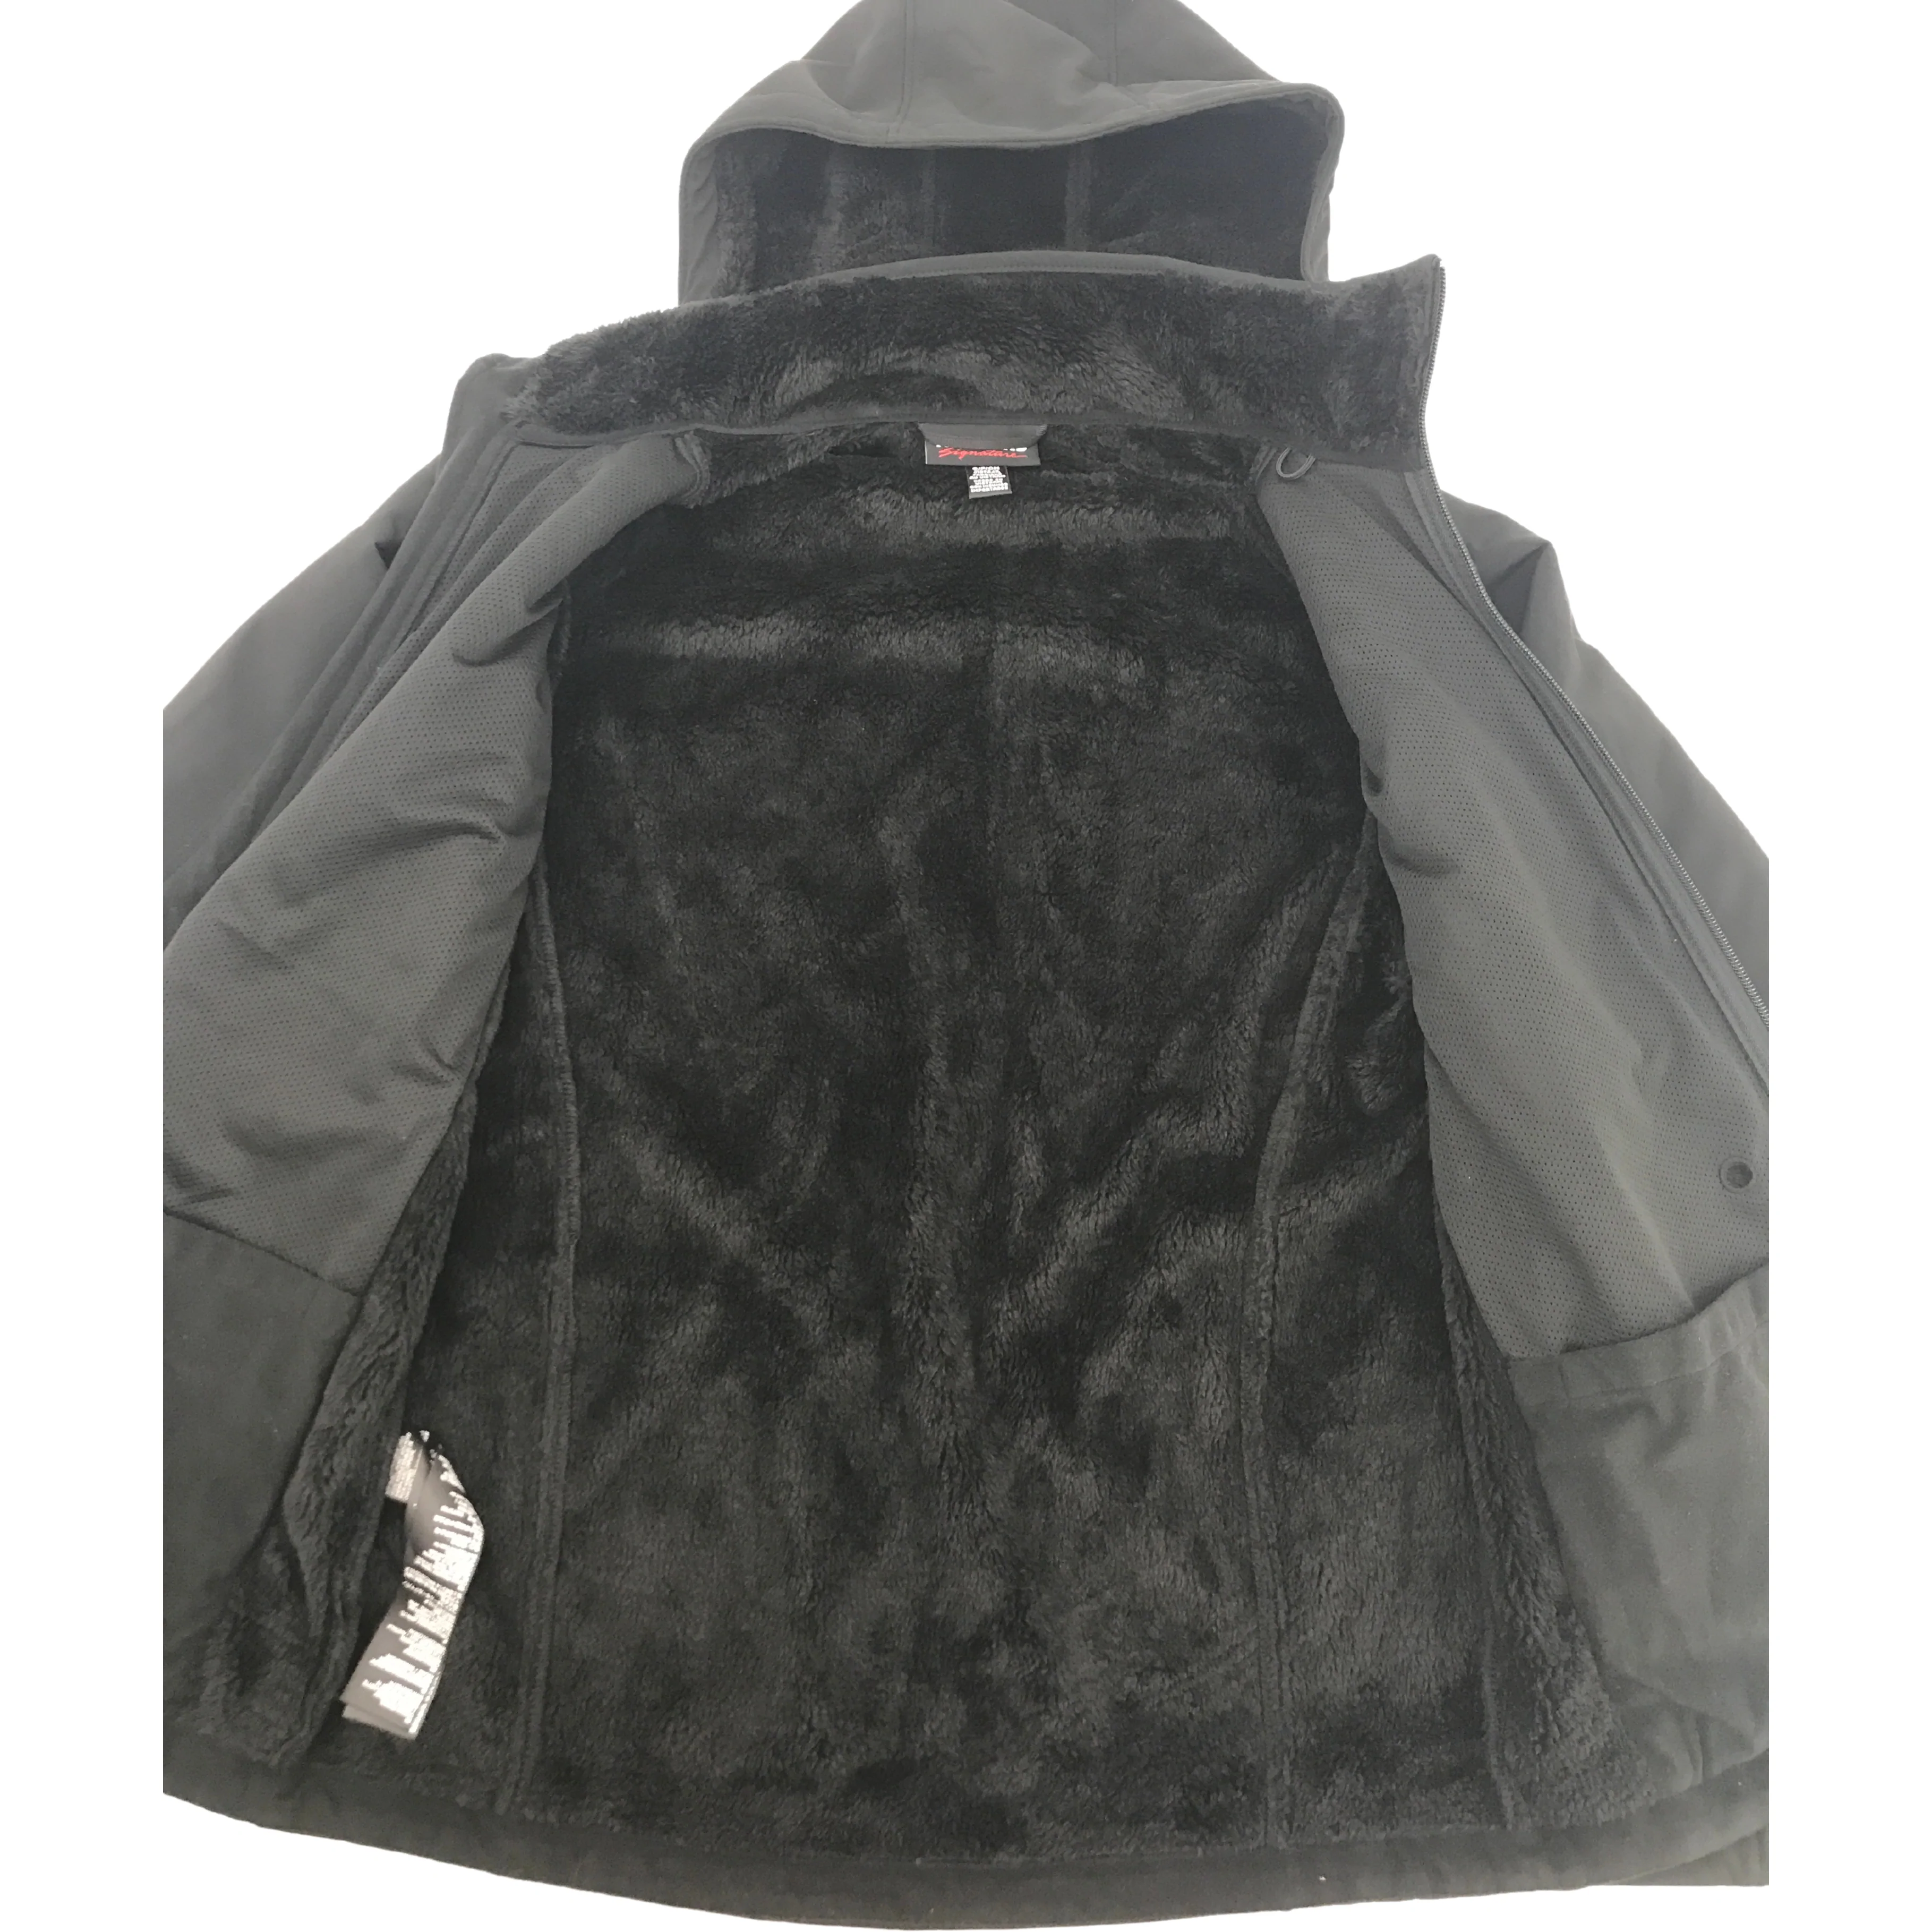 Kirkland Signature Men's Winter Coat / Winter Jacket / Lined / Black / Size Small